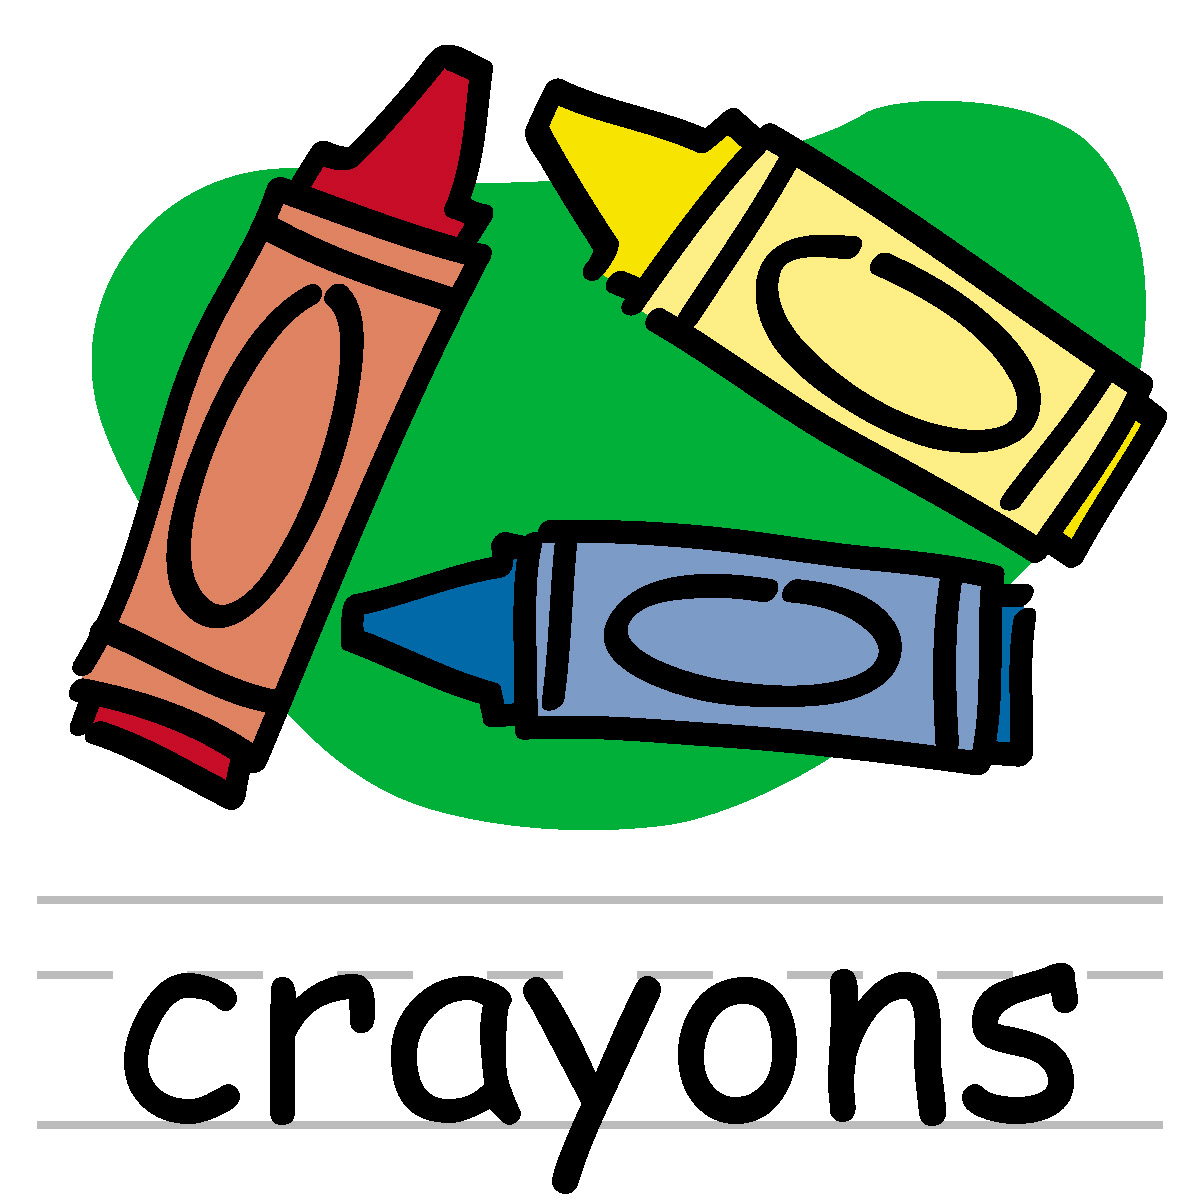 Crayon Clip Art Crayon Clip Art 7 Jpg